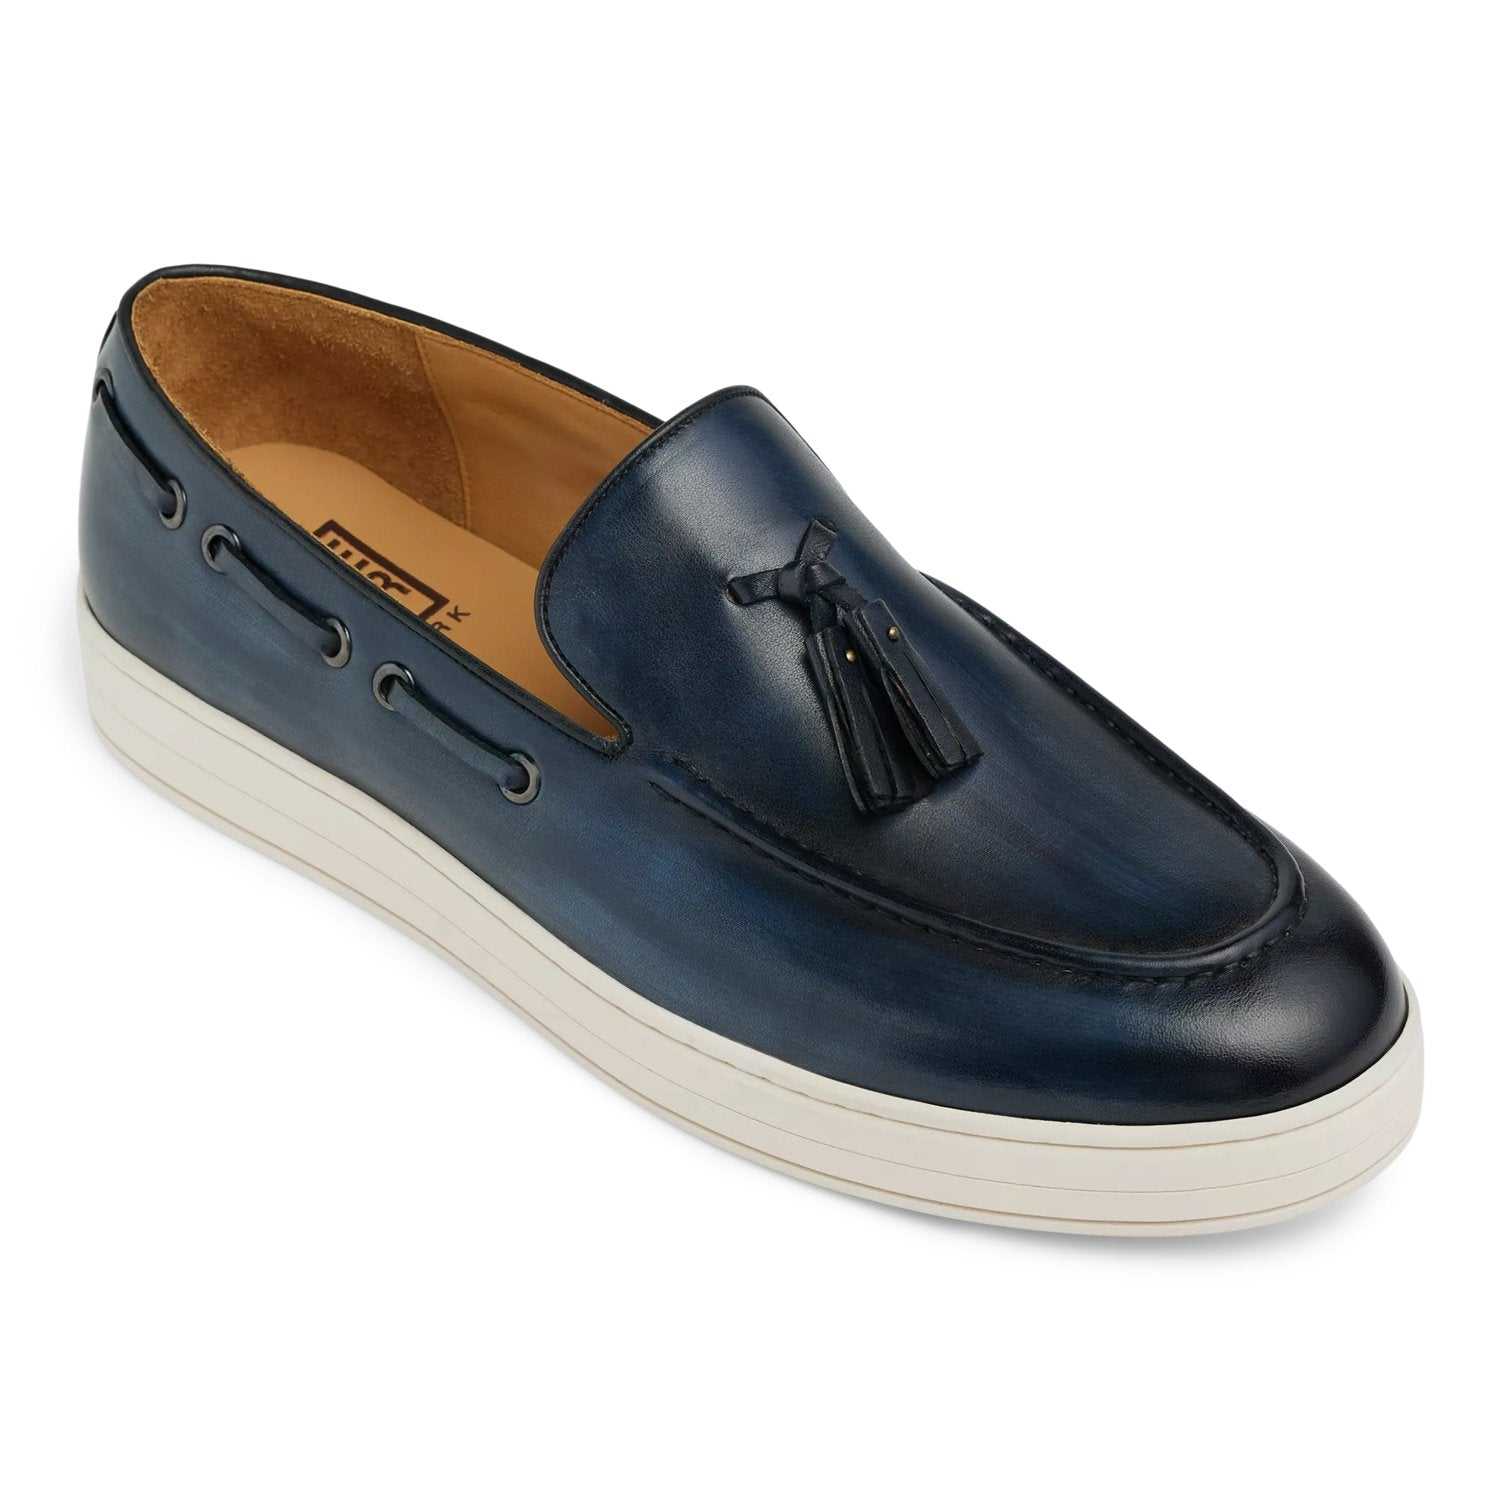 Slip-On Boat Shoes